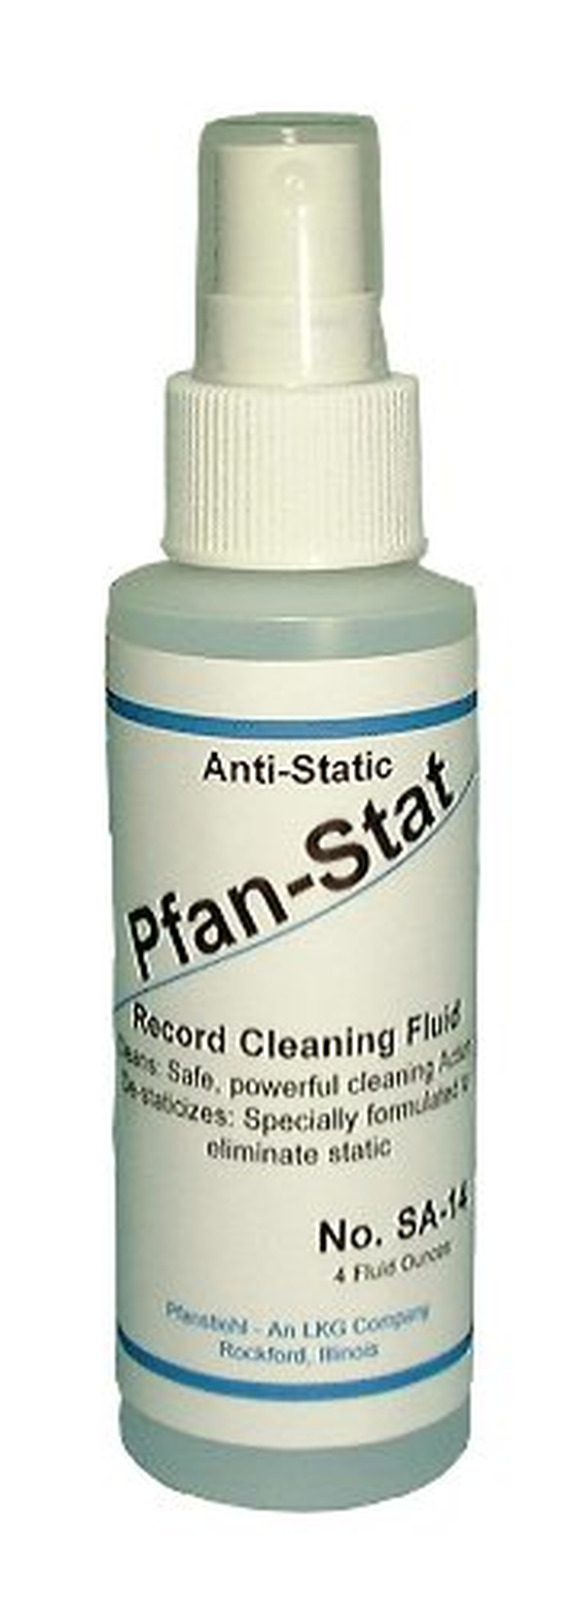 Pfan-stat Record Cleaning Fluid - 4 Oz